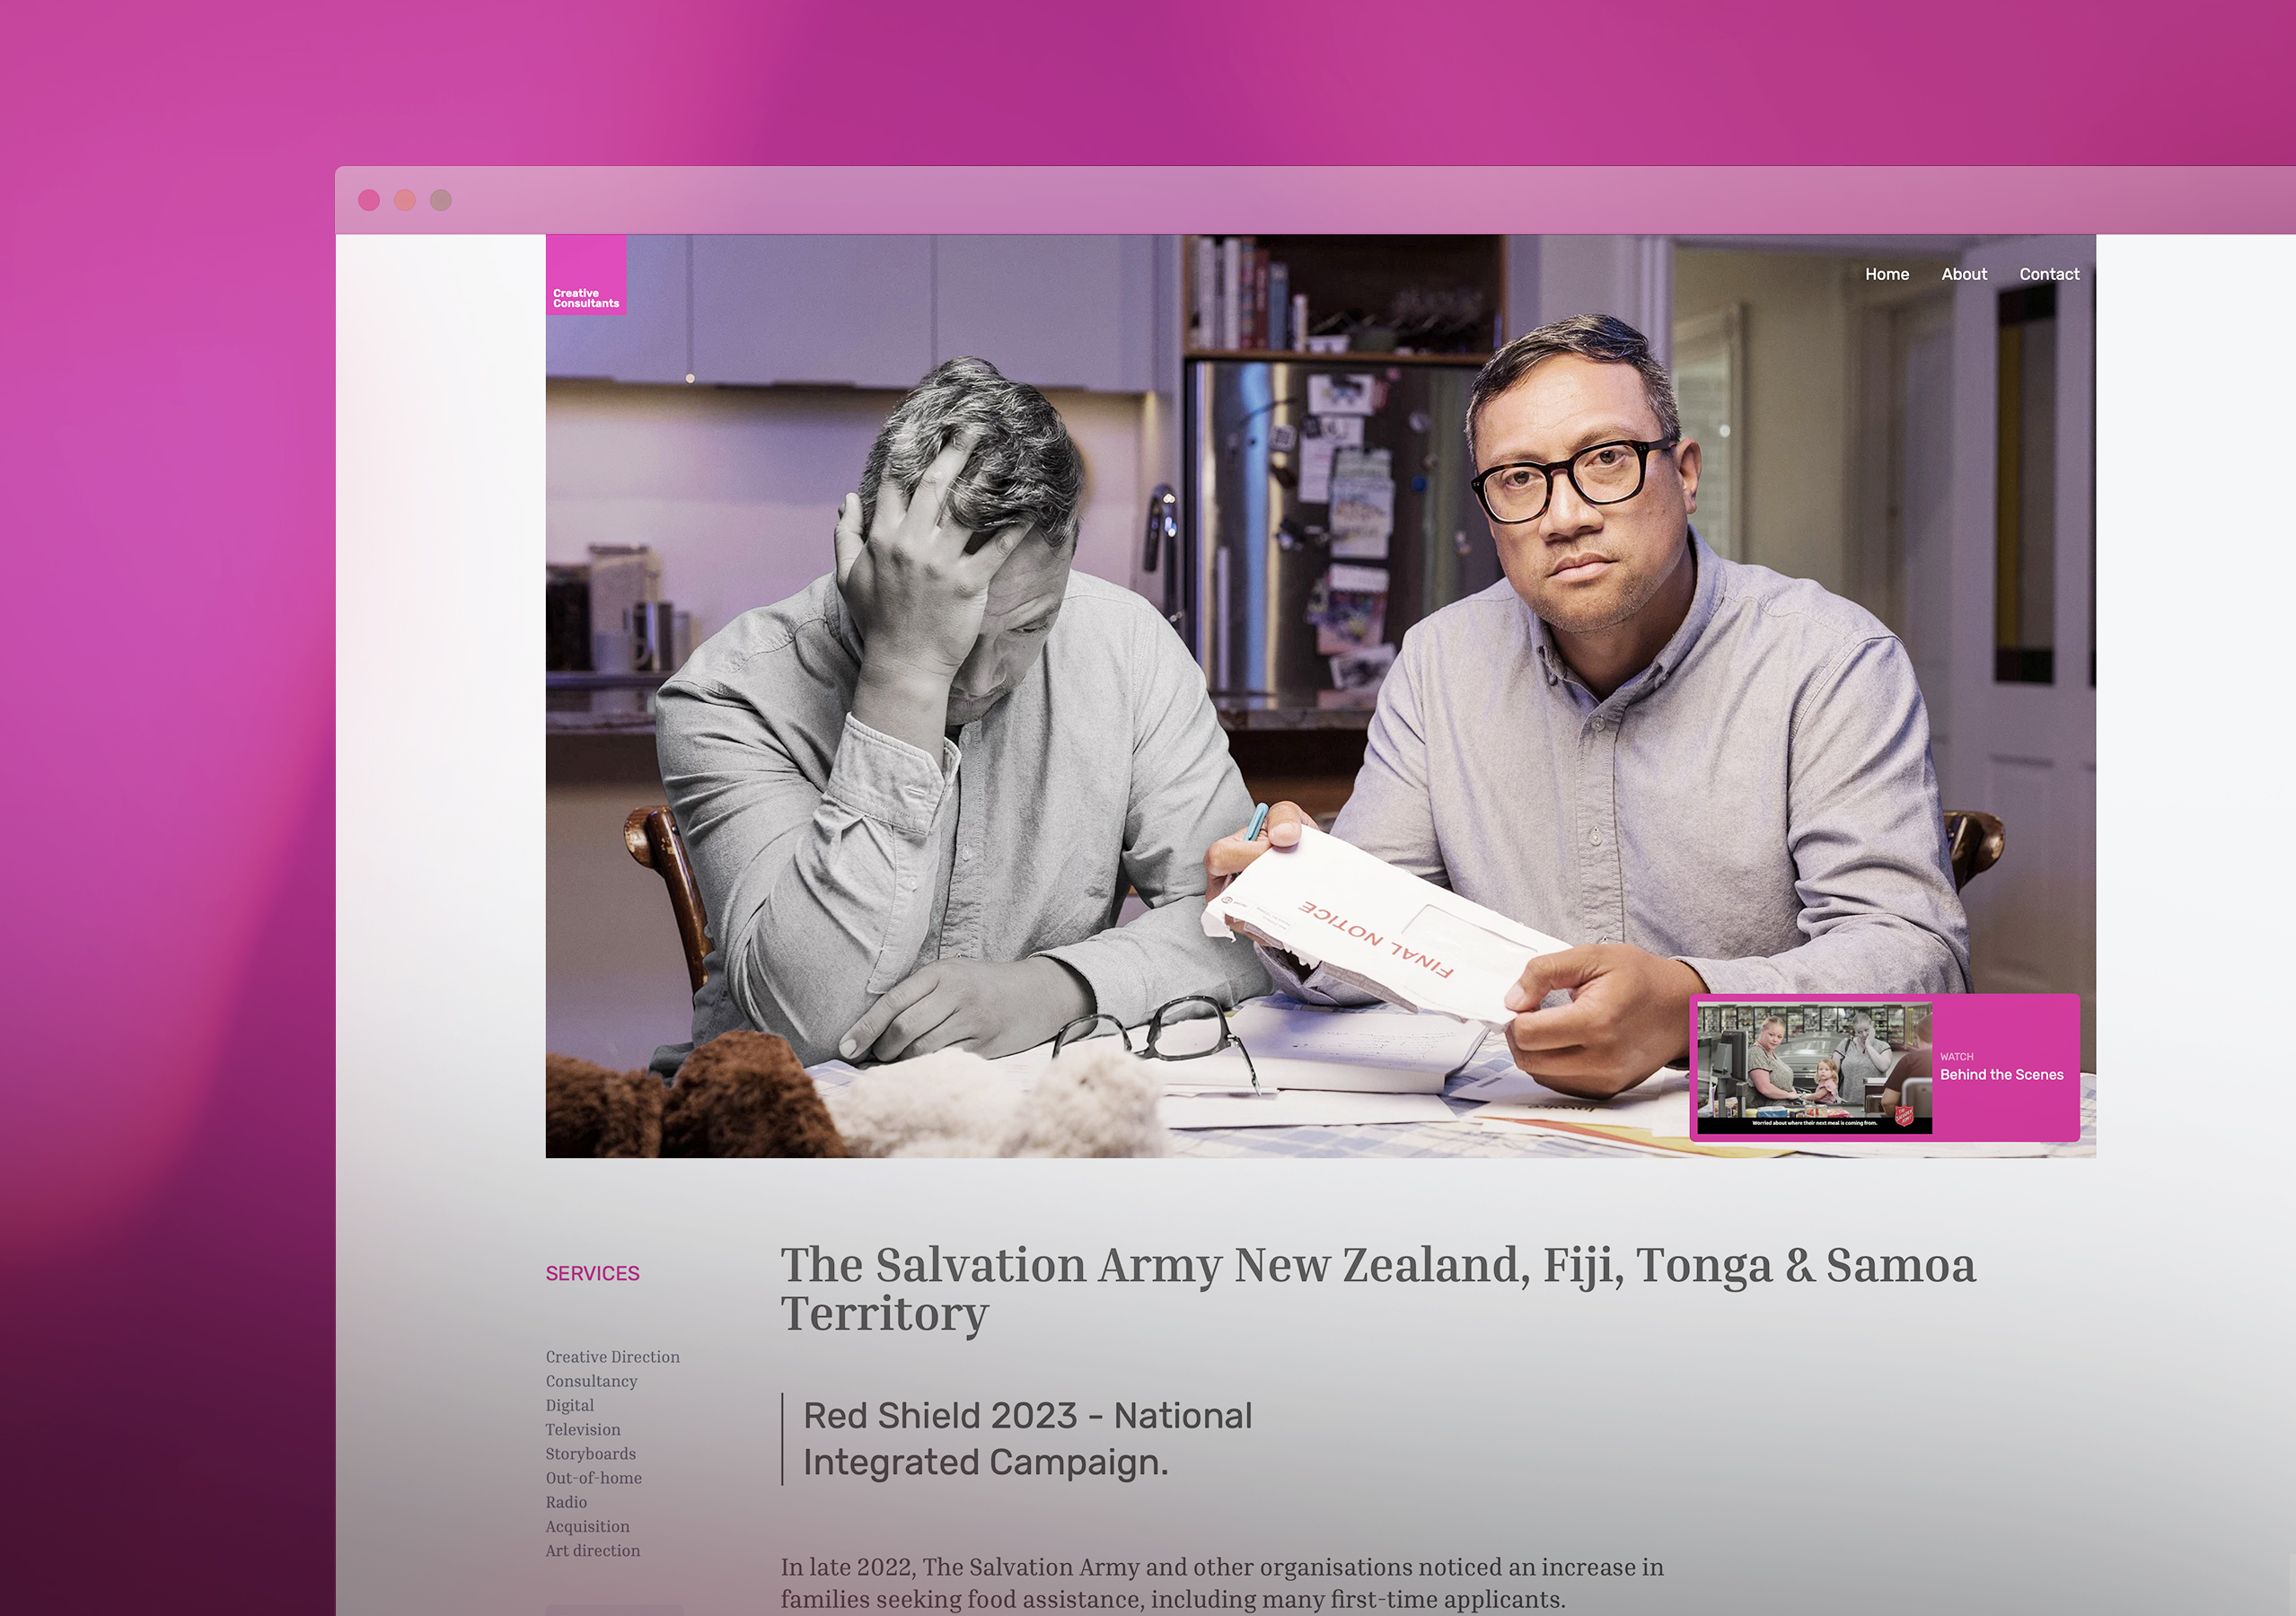 CreativeConsultants - New Zealand creative consultancy agency